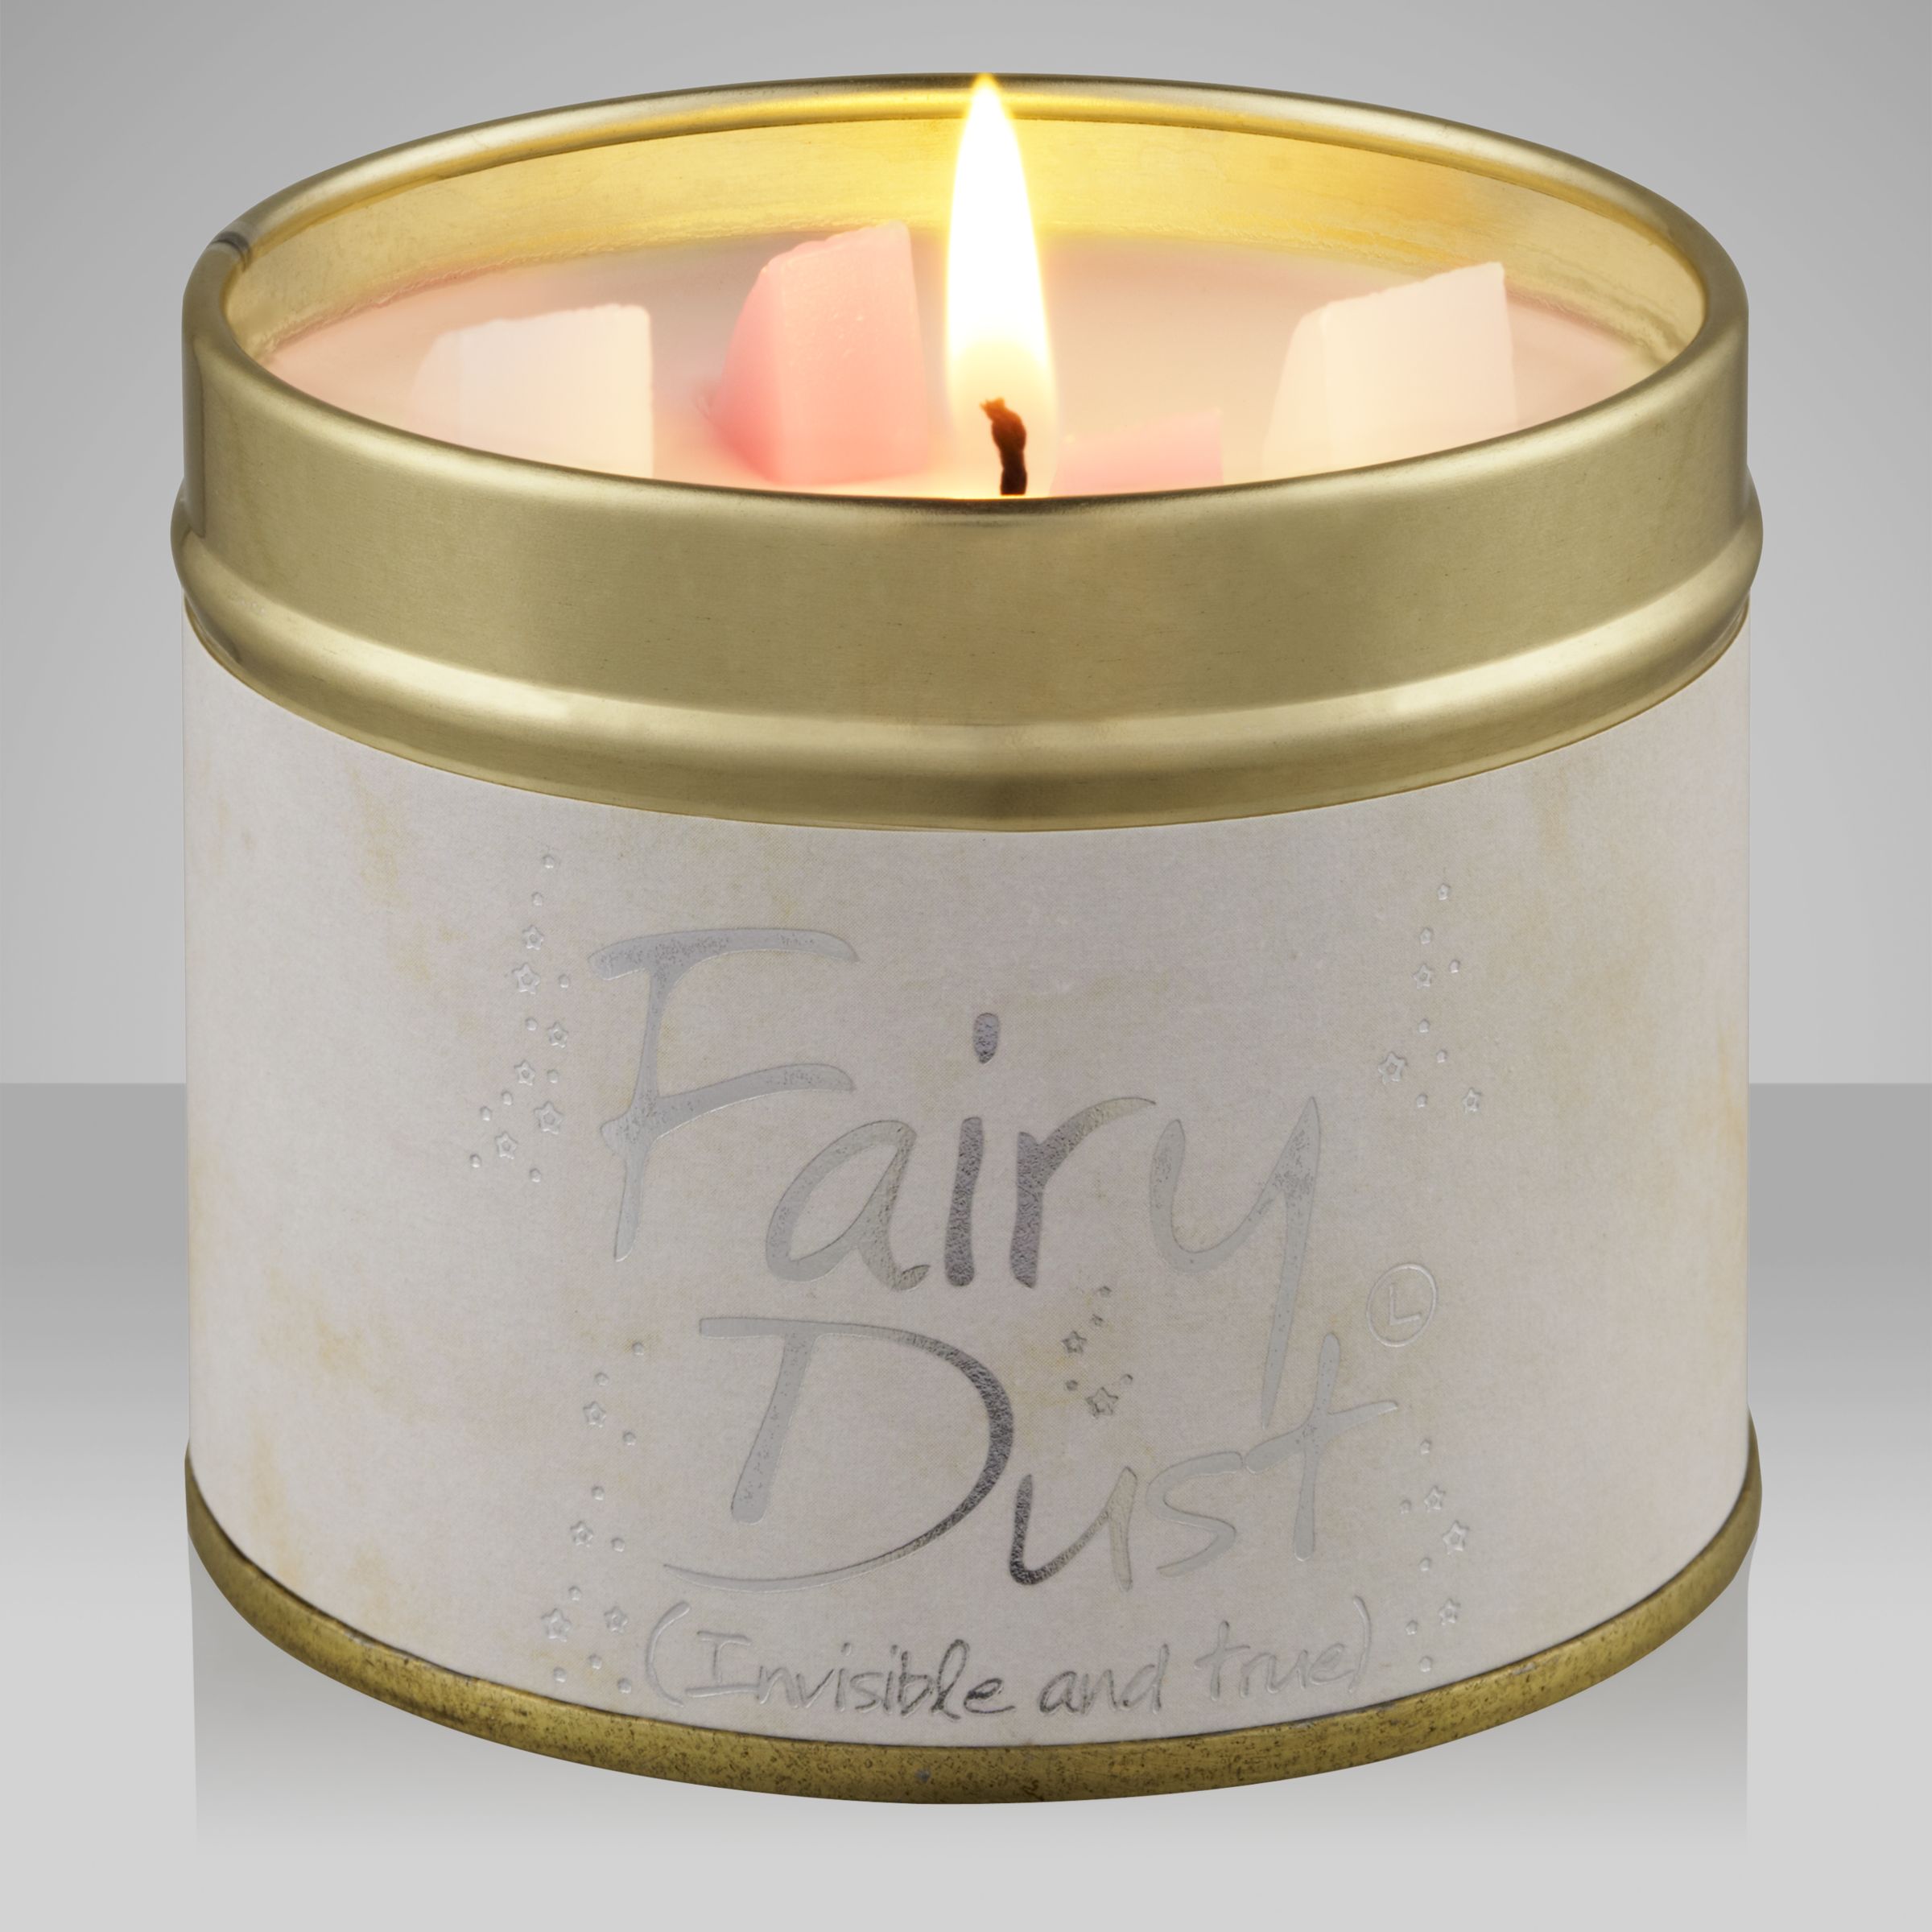 Fairy Dust Candle